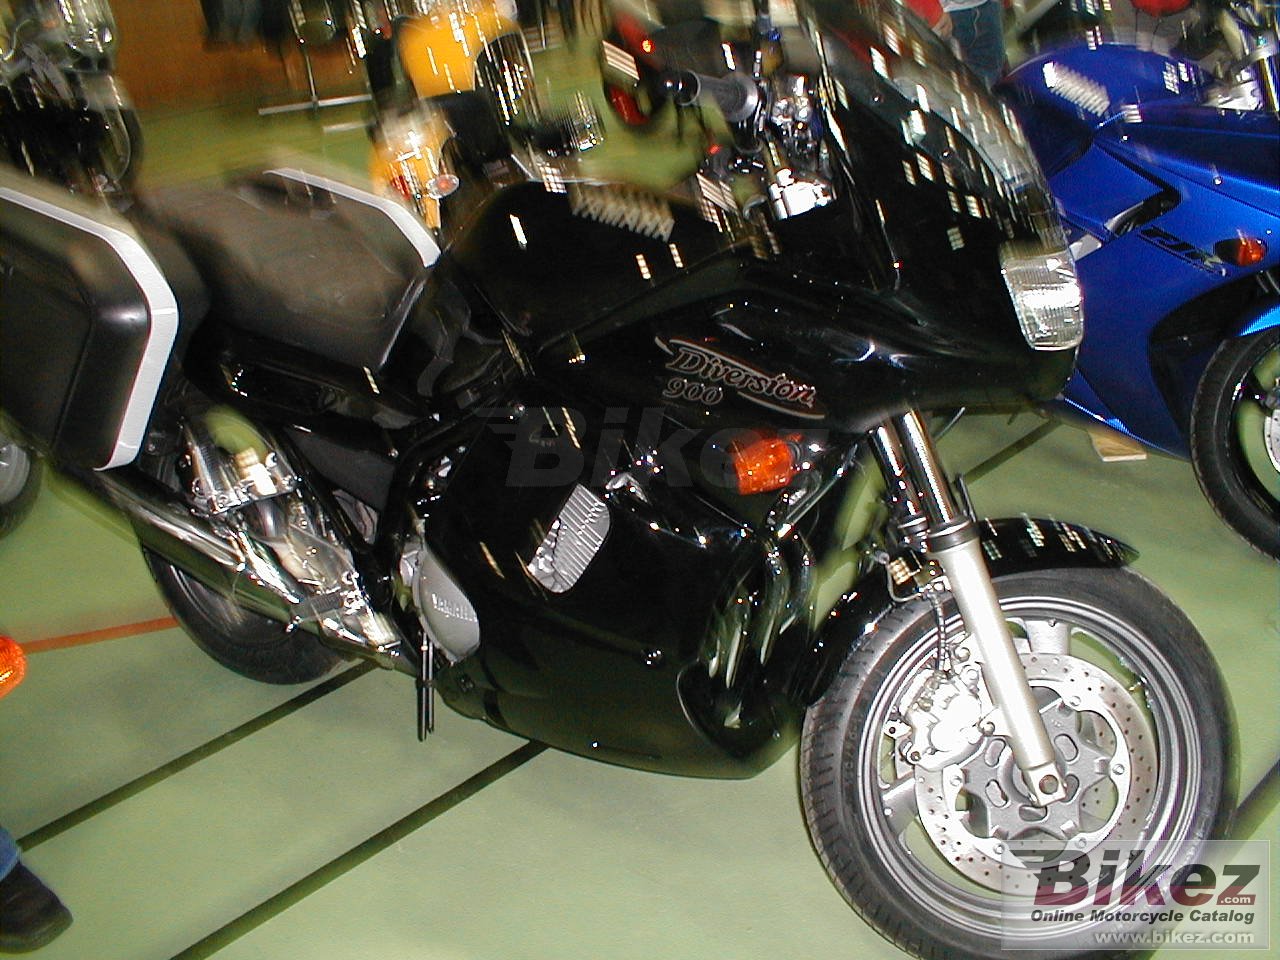 Yamaha XJ 900 S Diversion